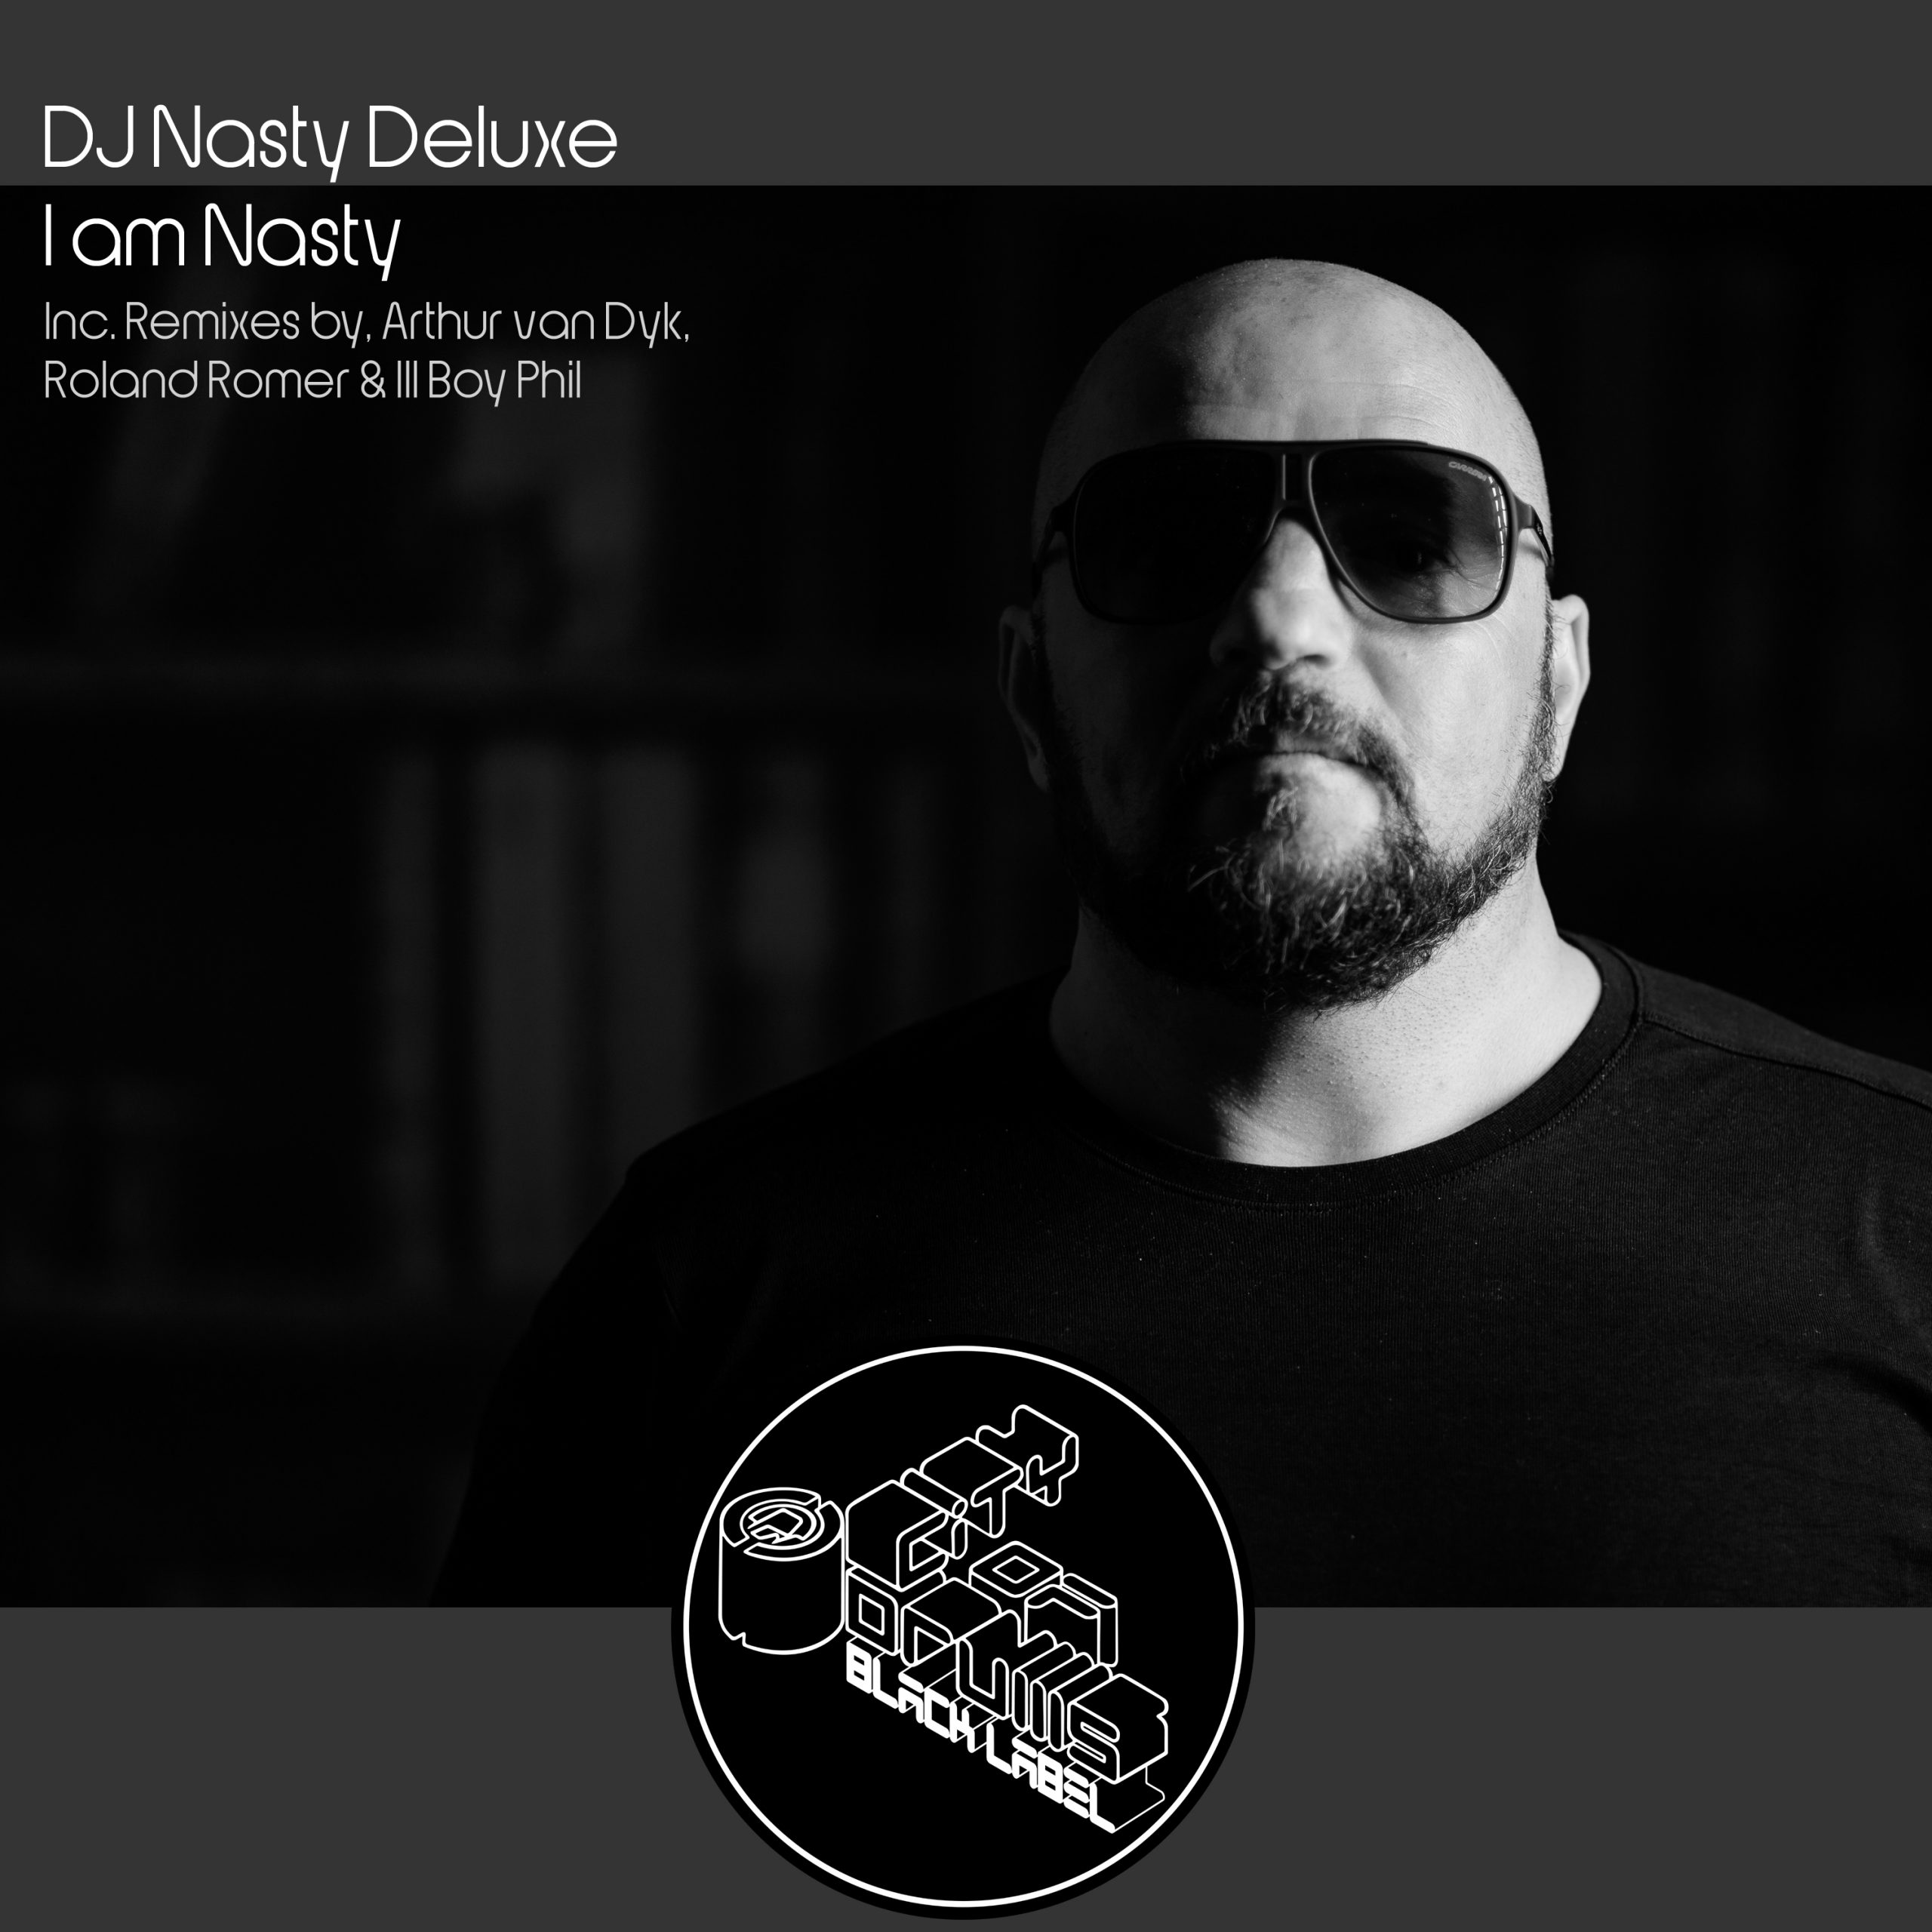 OUT NOW!!! I am Nasty von DJ Nasty Deluxe! 9